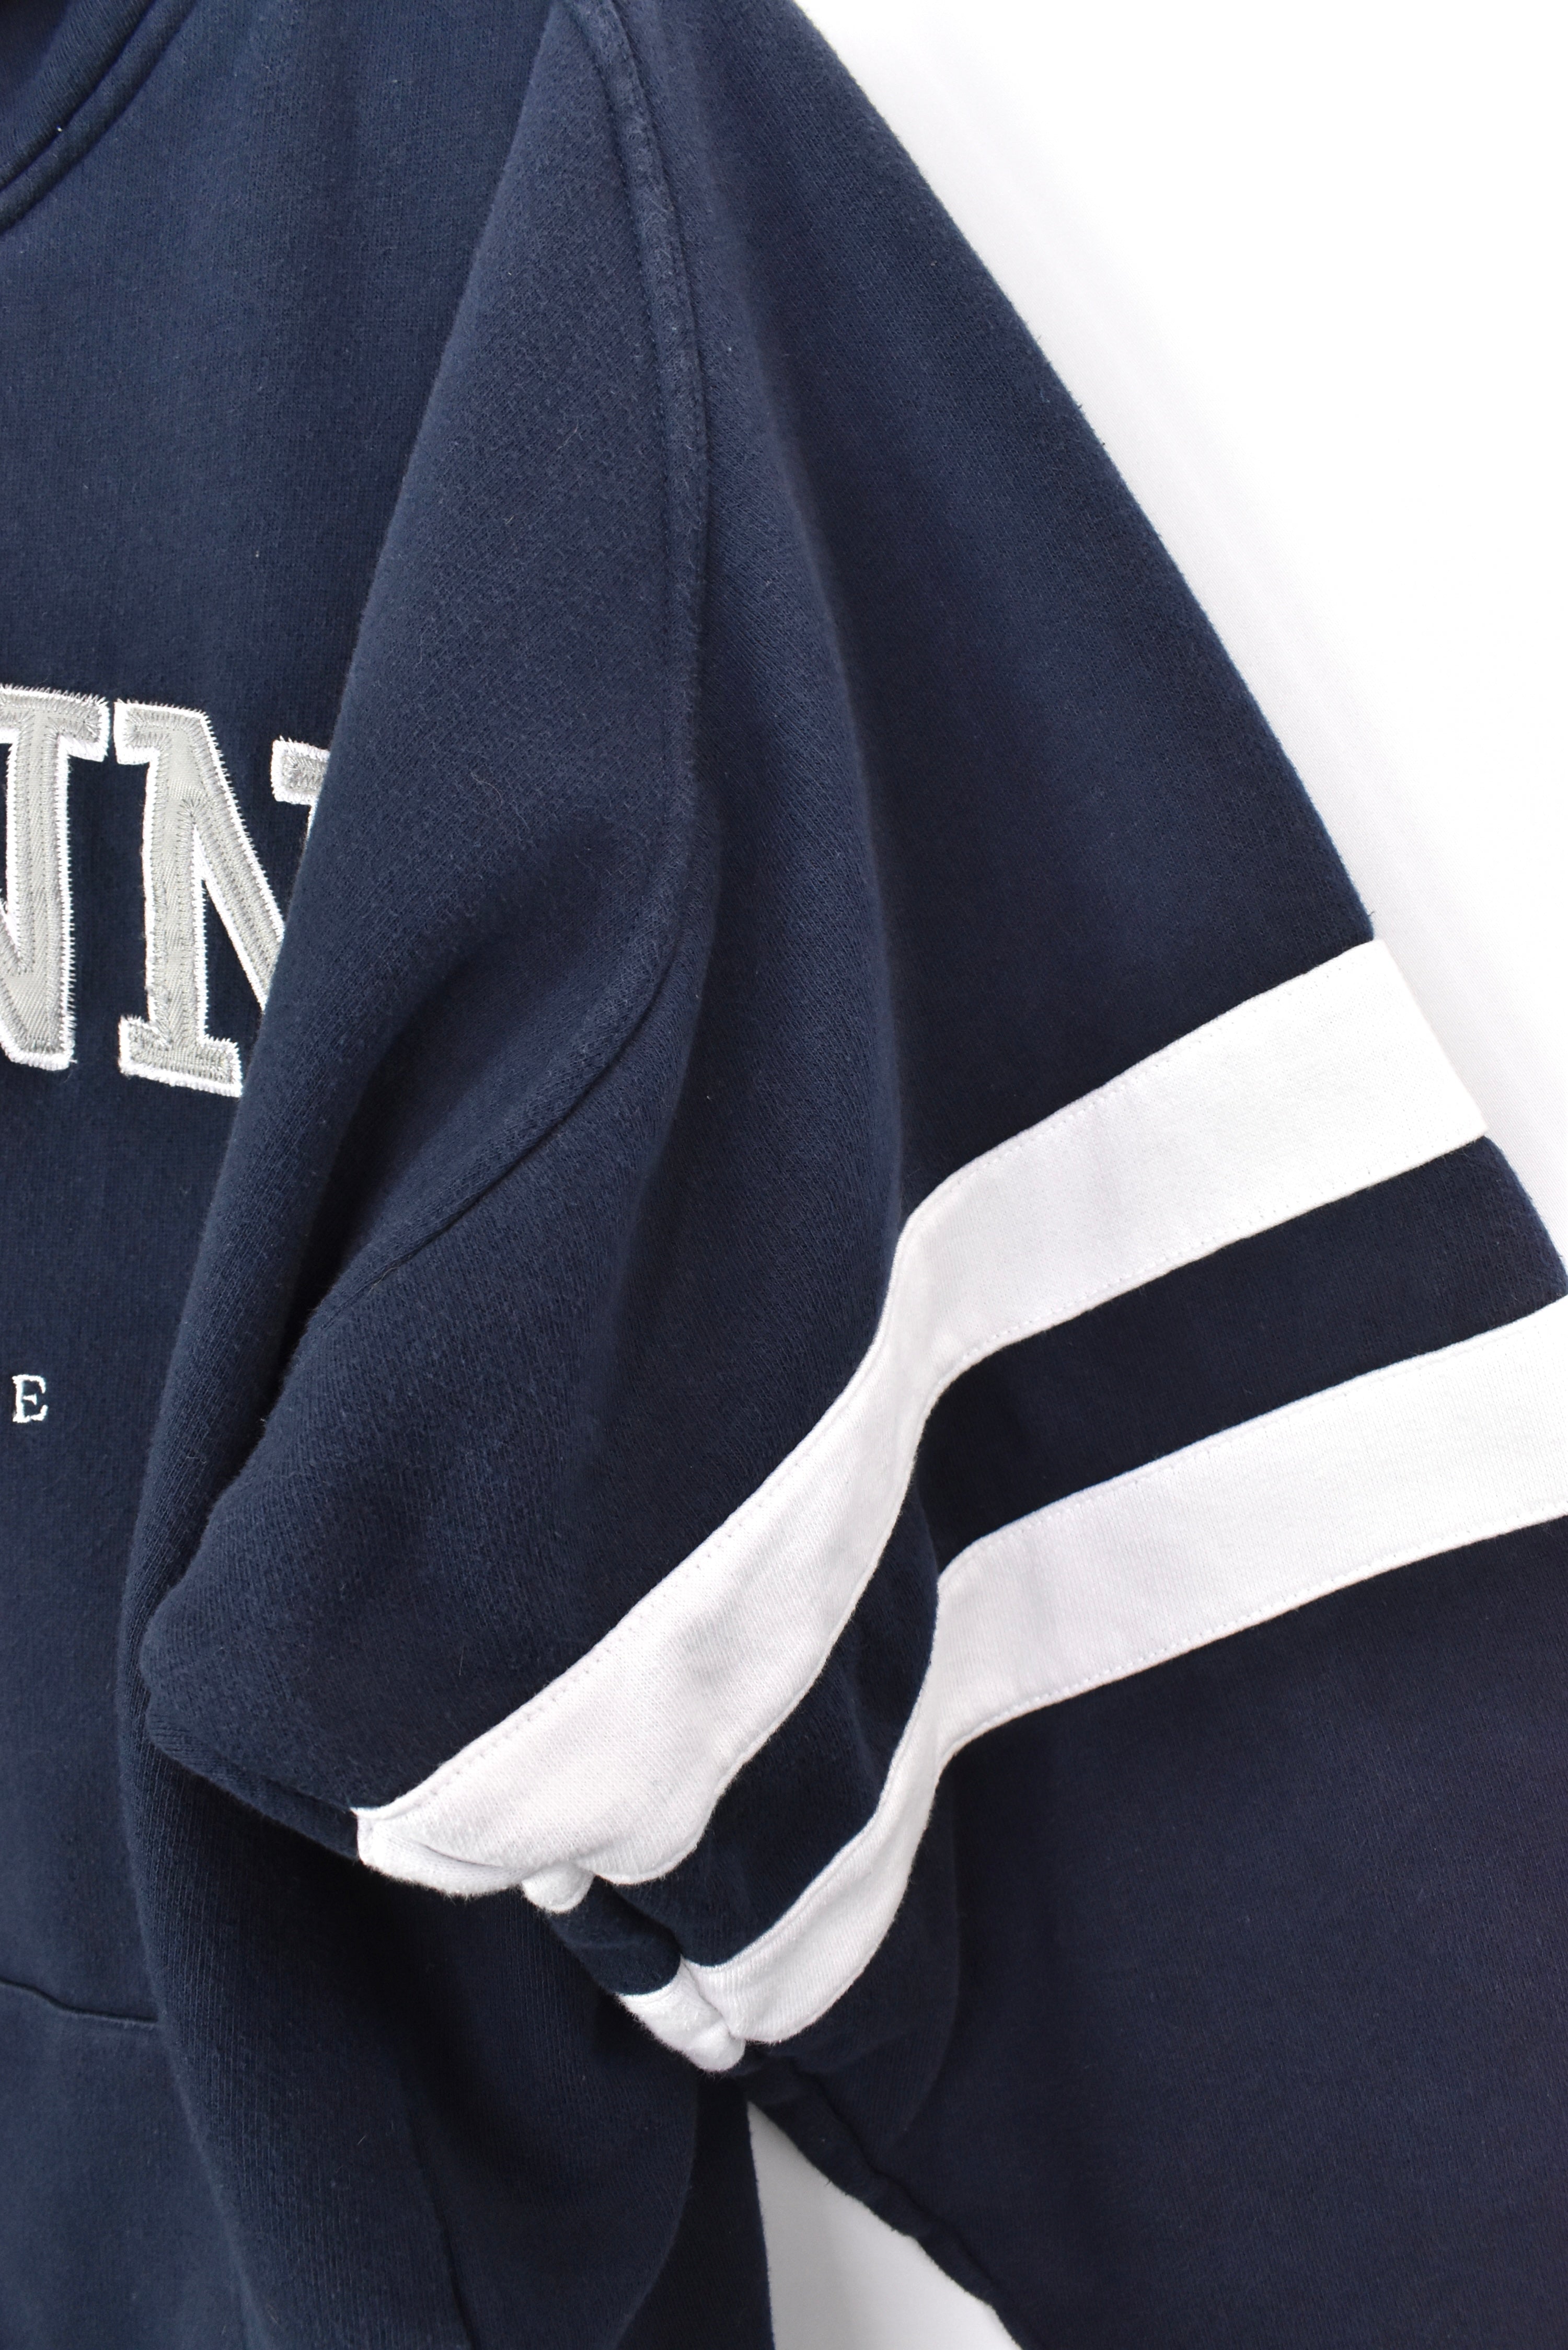 Vintage University of Connecticut hoodie, Huskies embroidered sweatshirt- AU XXL COLLEGE